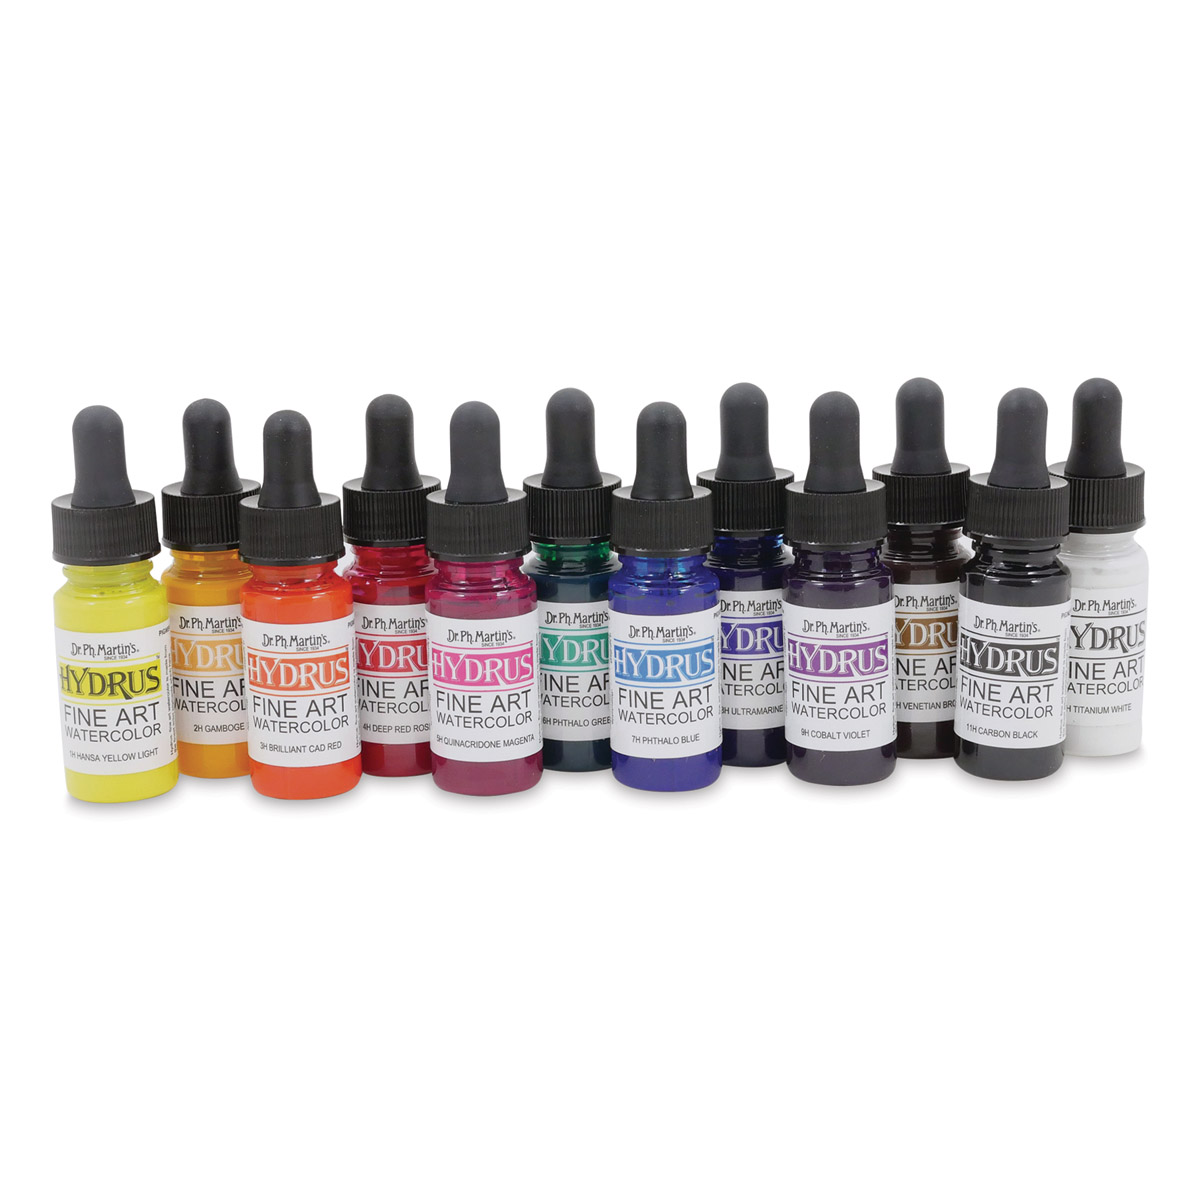 Dr. Ph. Martin's Hydrus Fine Art Liquid Watercolors - Set 1, 12 Assorted  colors, 0.5 oz Bottles